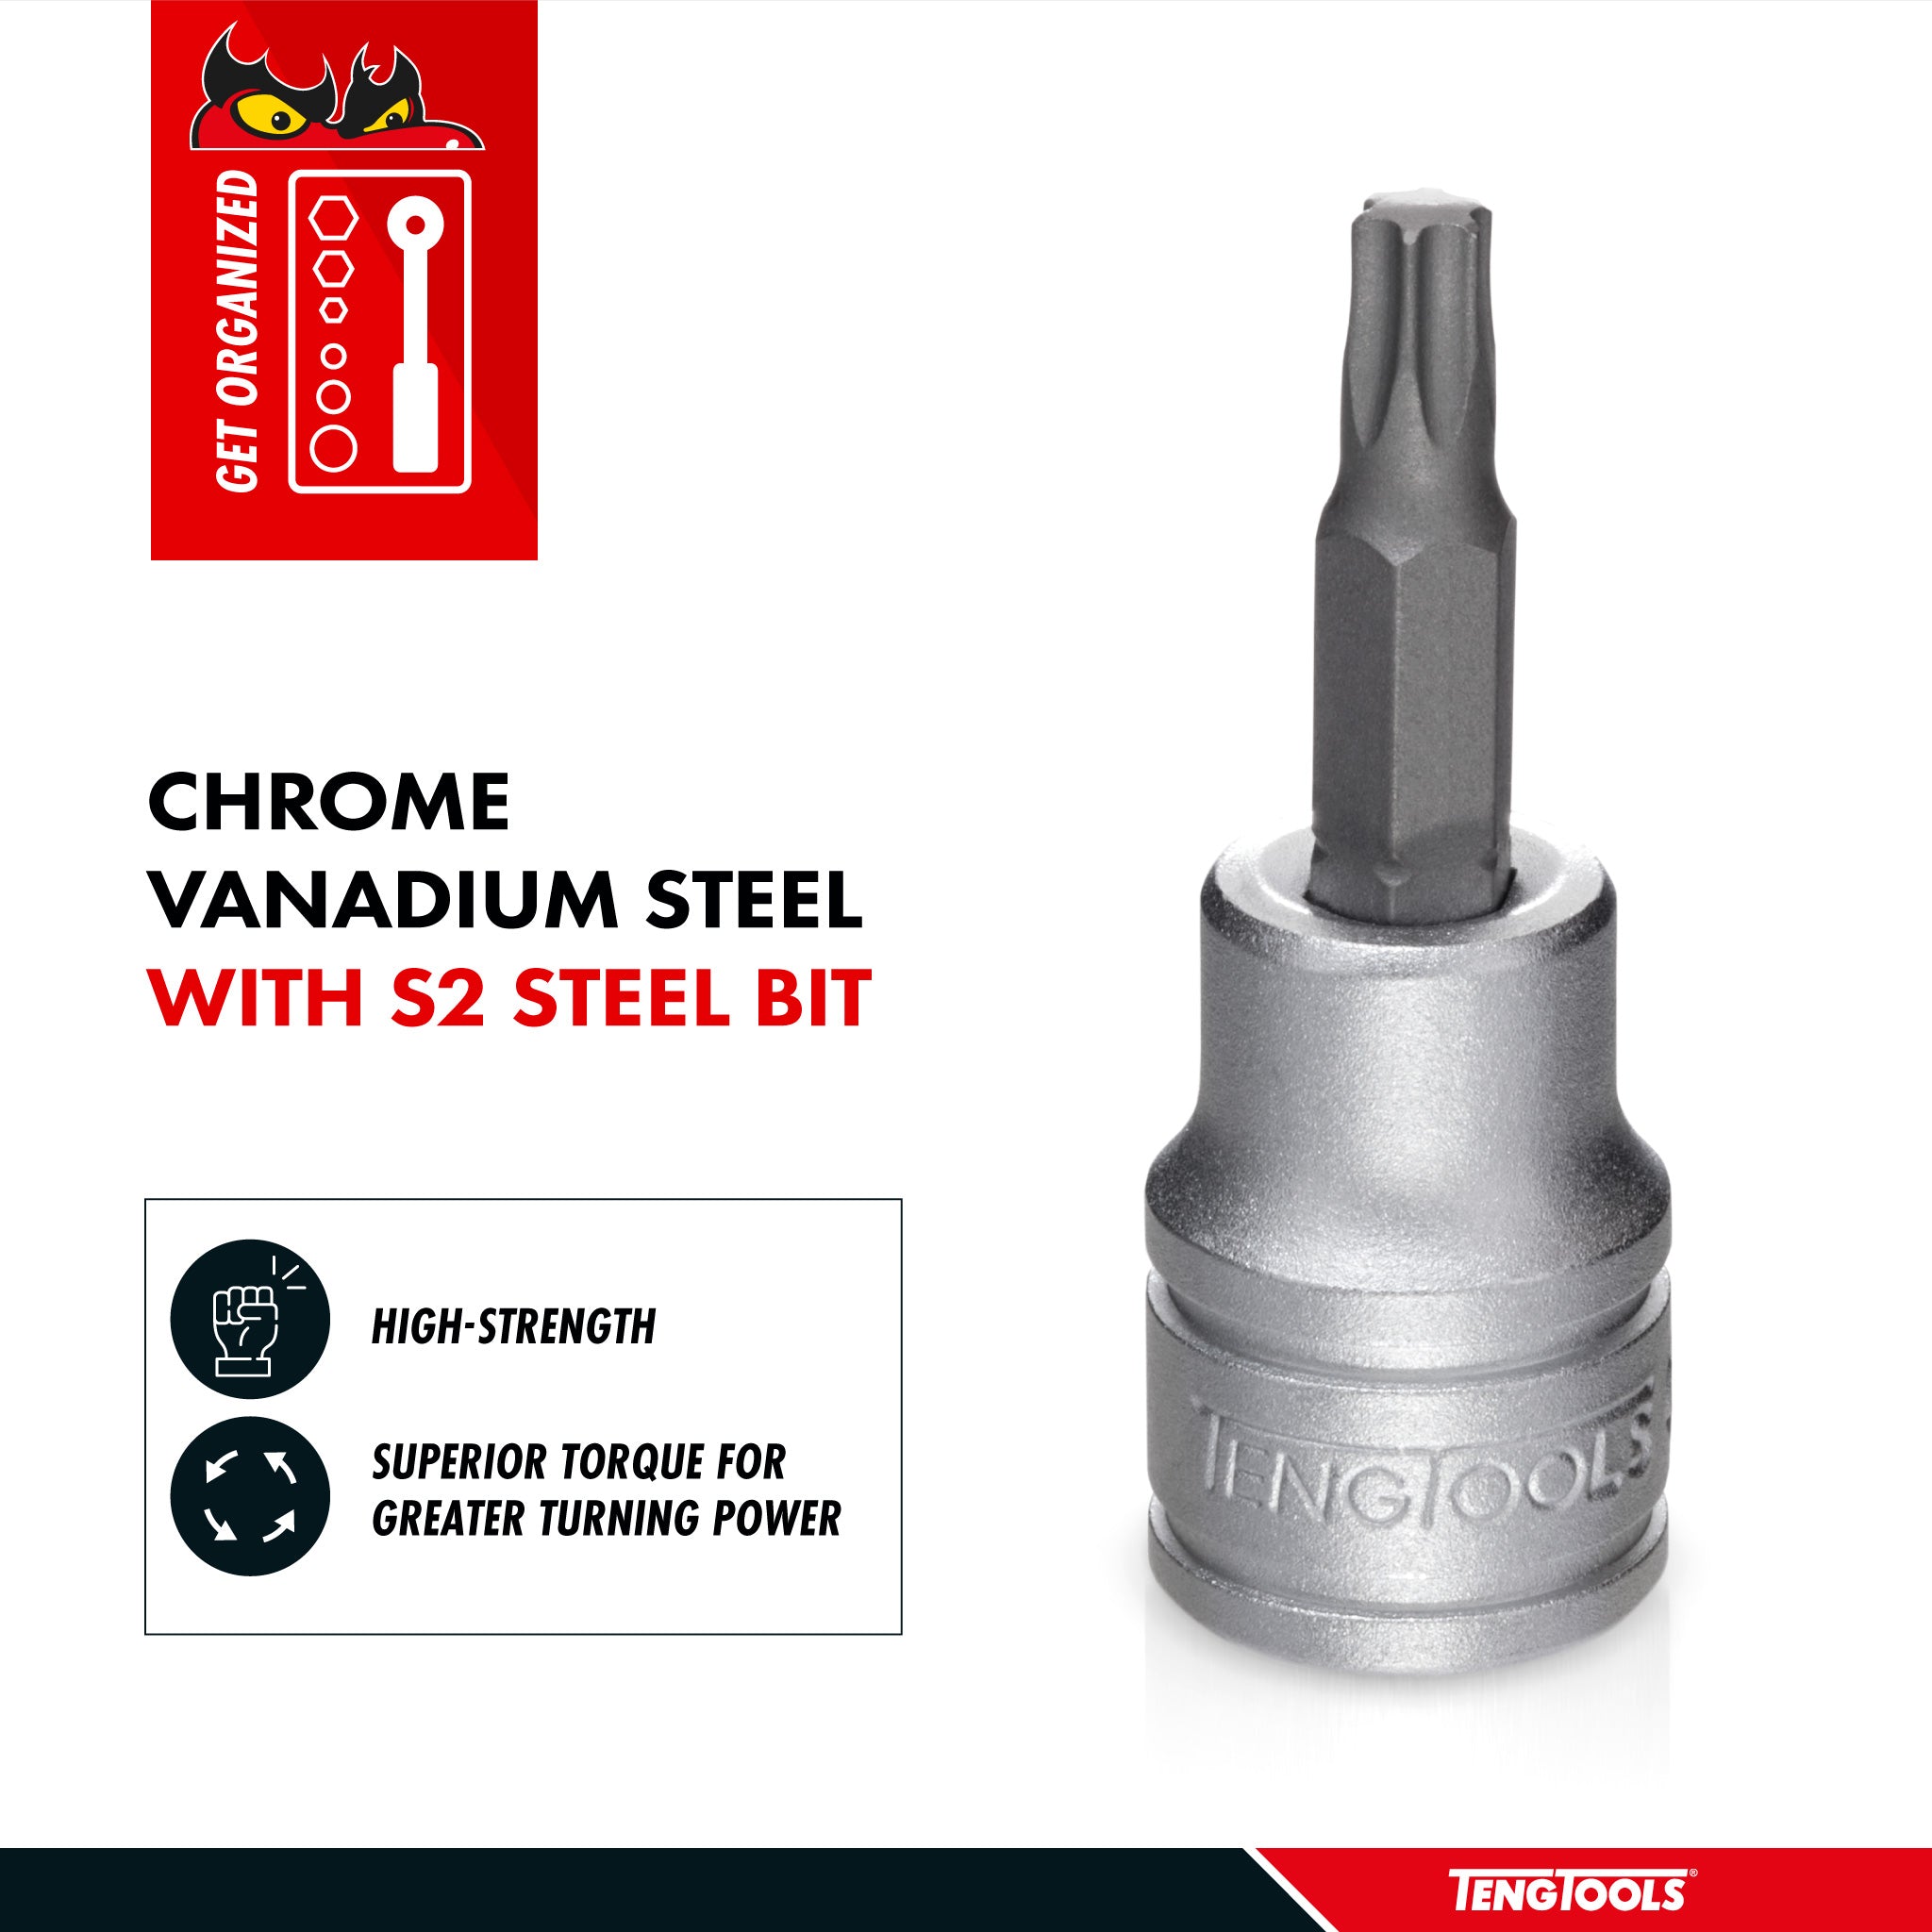 Teng Tools 3/8 Inch Drive Metric Torx TX Chrome Vanadium Sockets - TX50